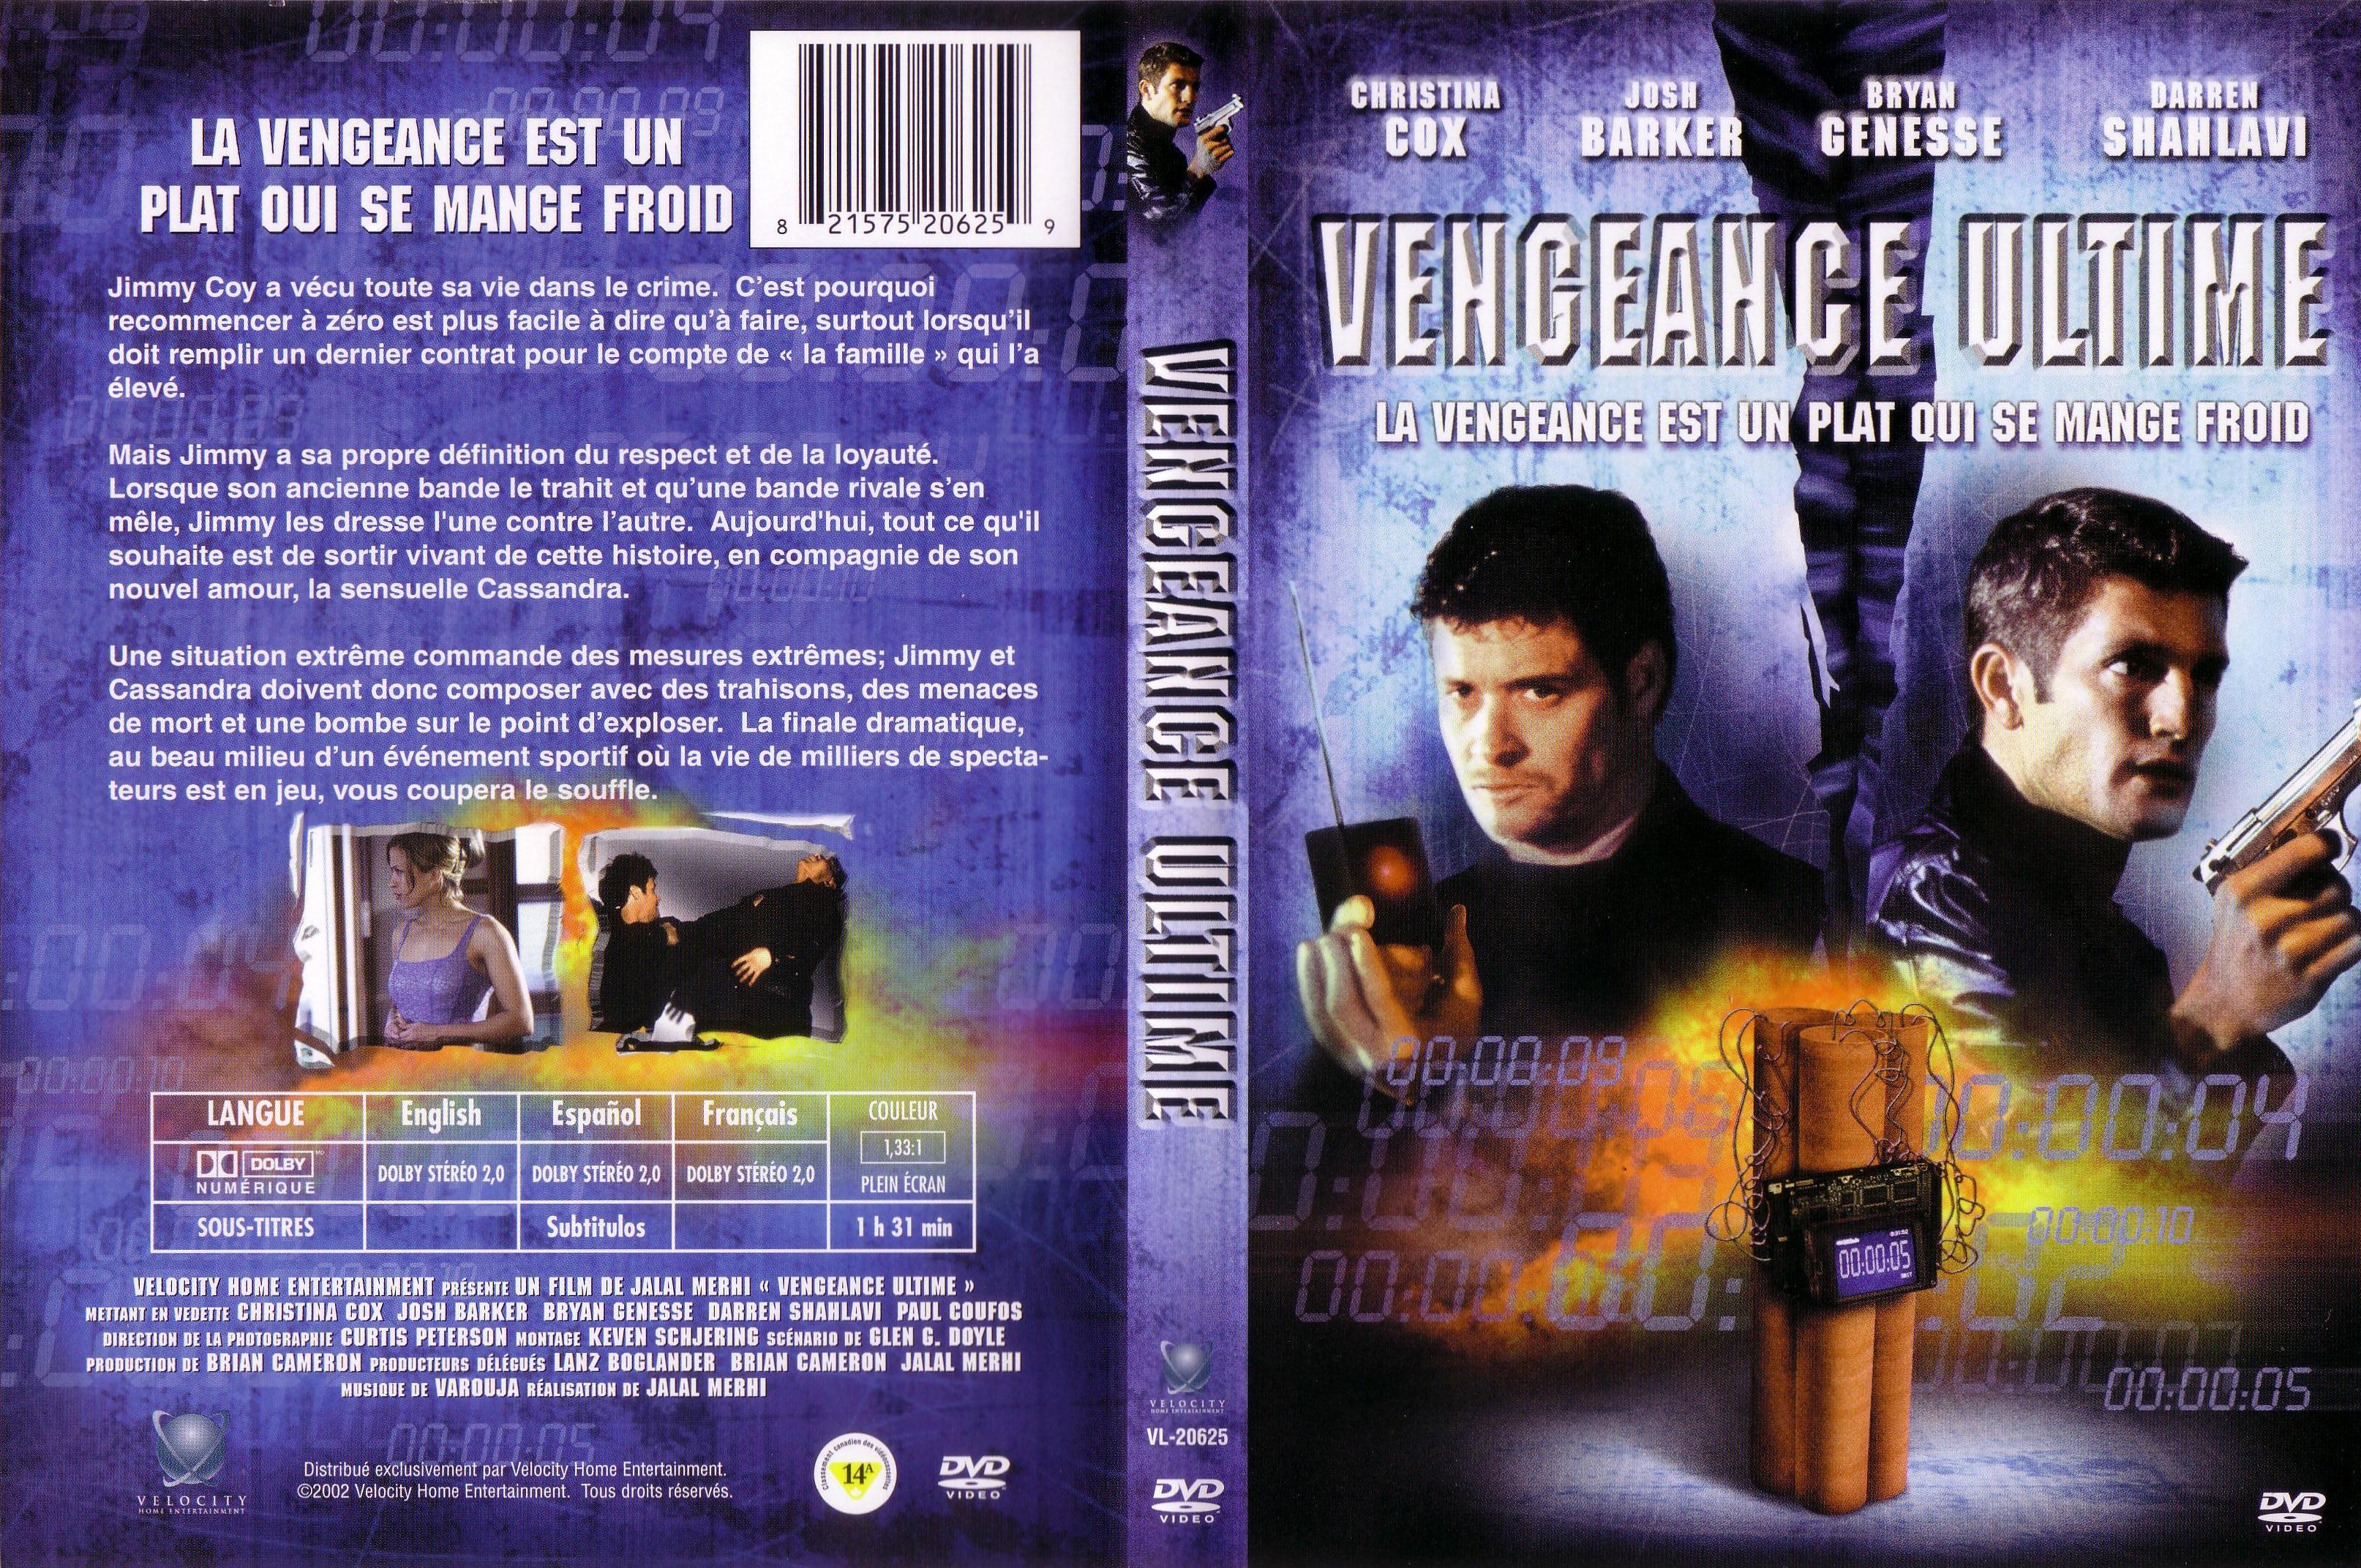 Jaquette DVD Vengeance ultime